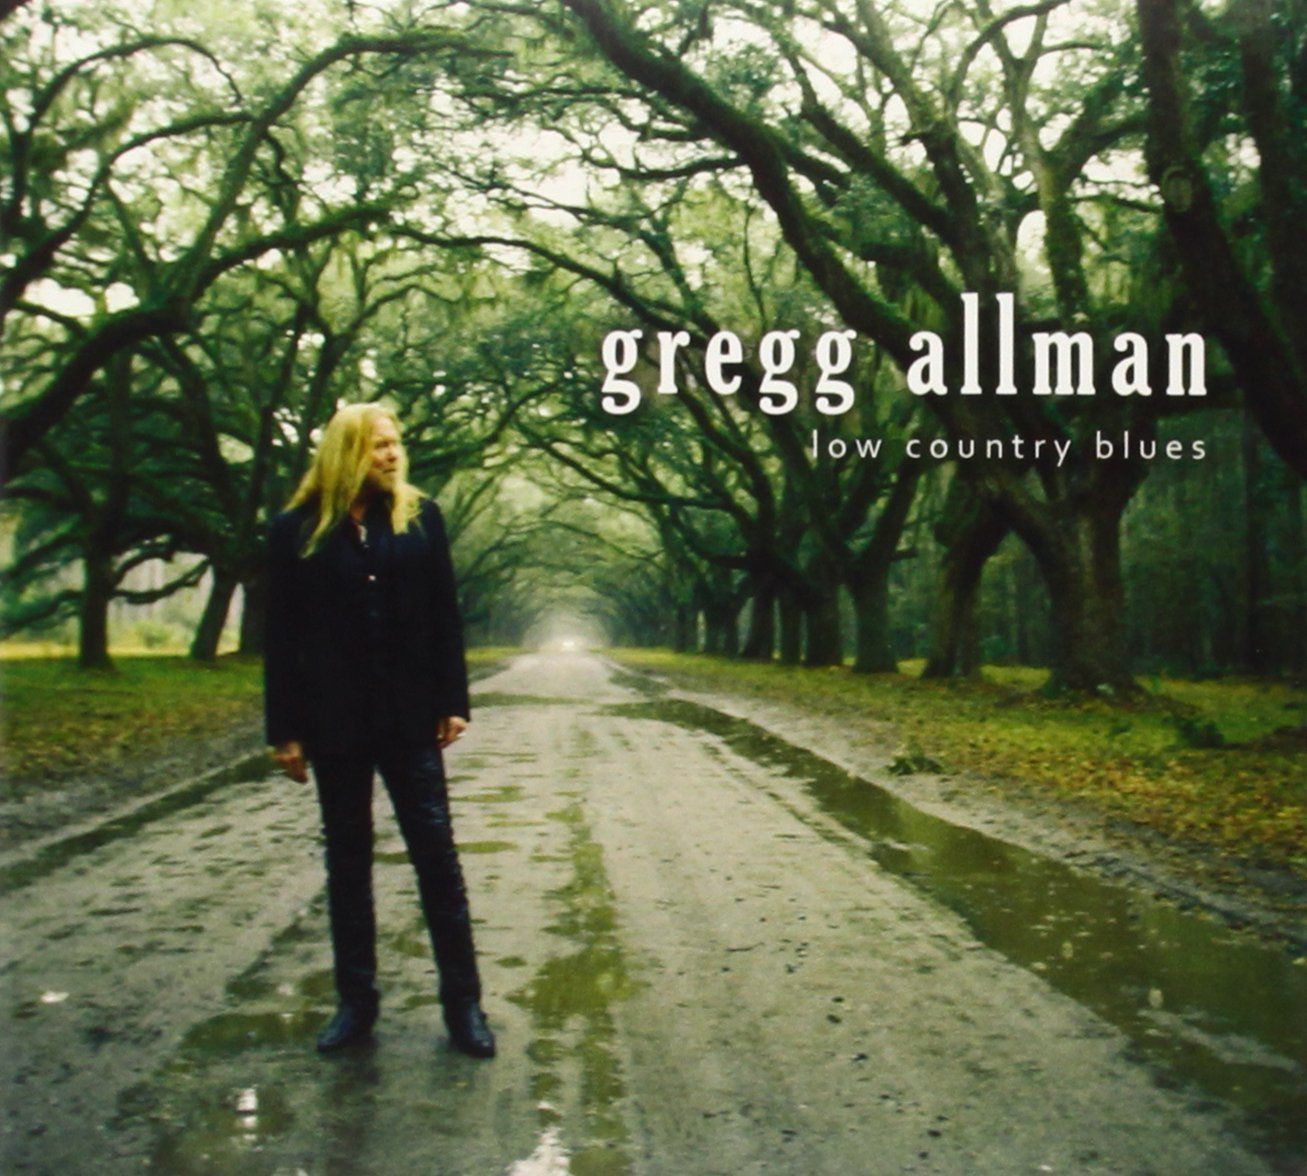 Gregg Allman: Manager verrät Details zu posthum erscheinendem "Southern Blood"-Album